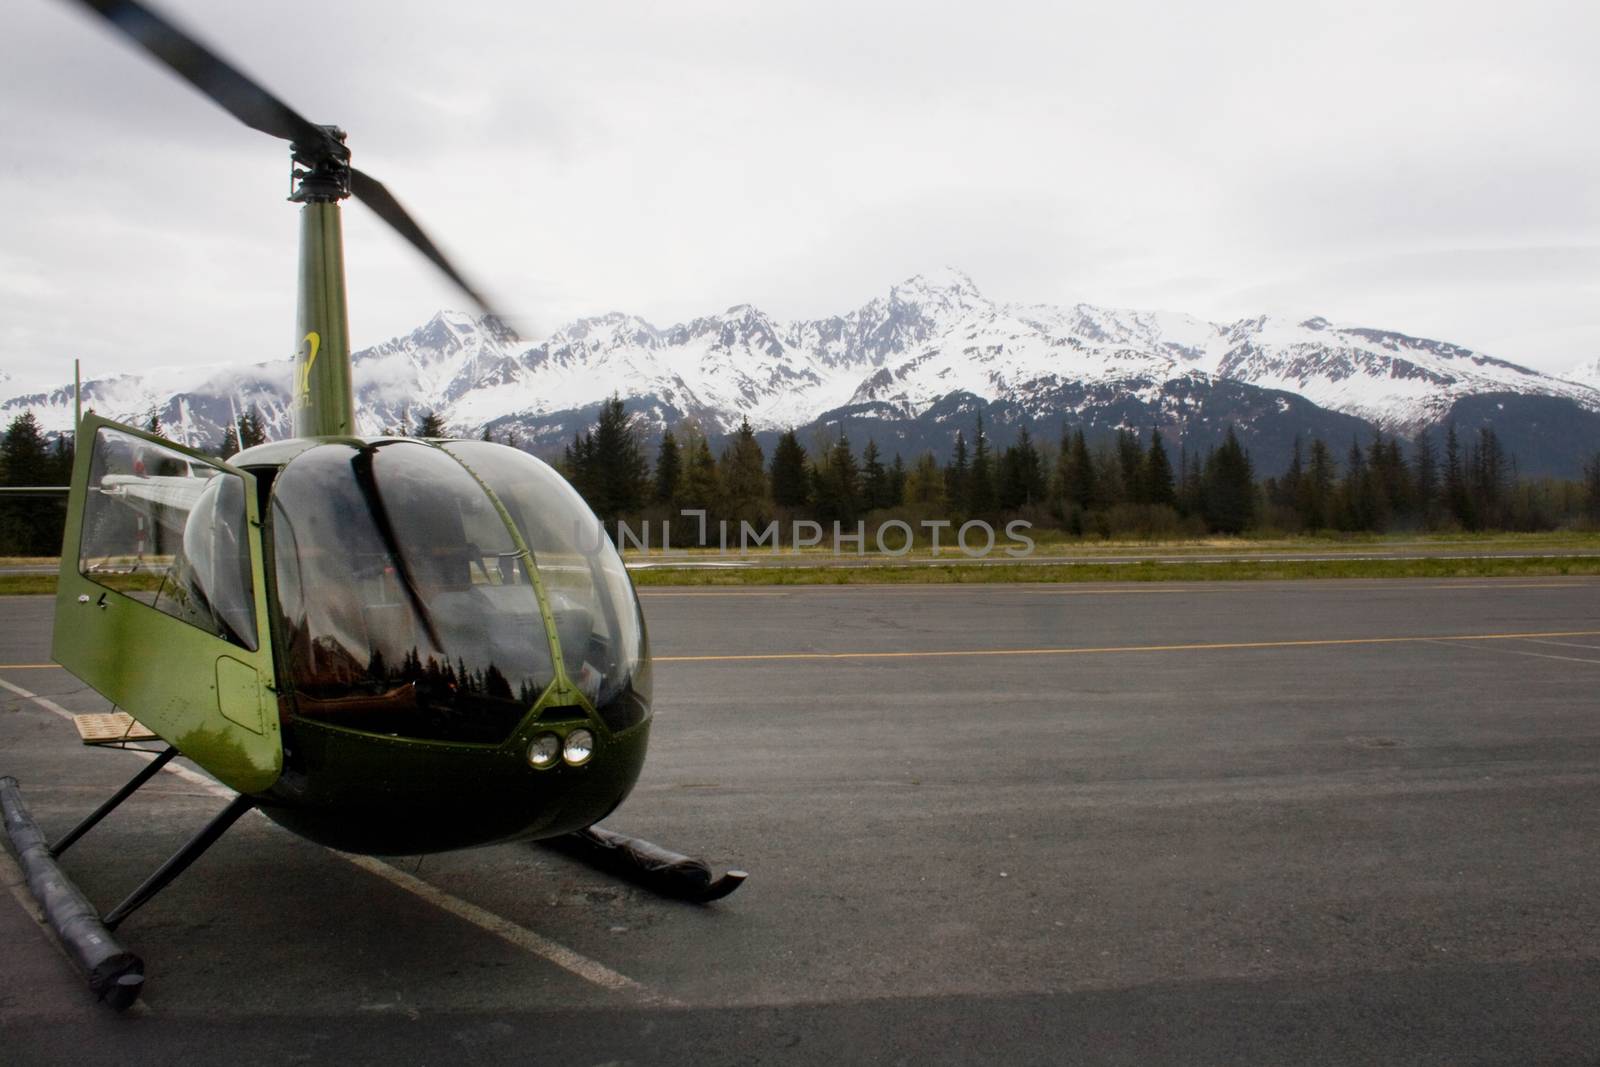 Green Helicopter on Runway in Seward Alaska by NikkiGensert